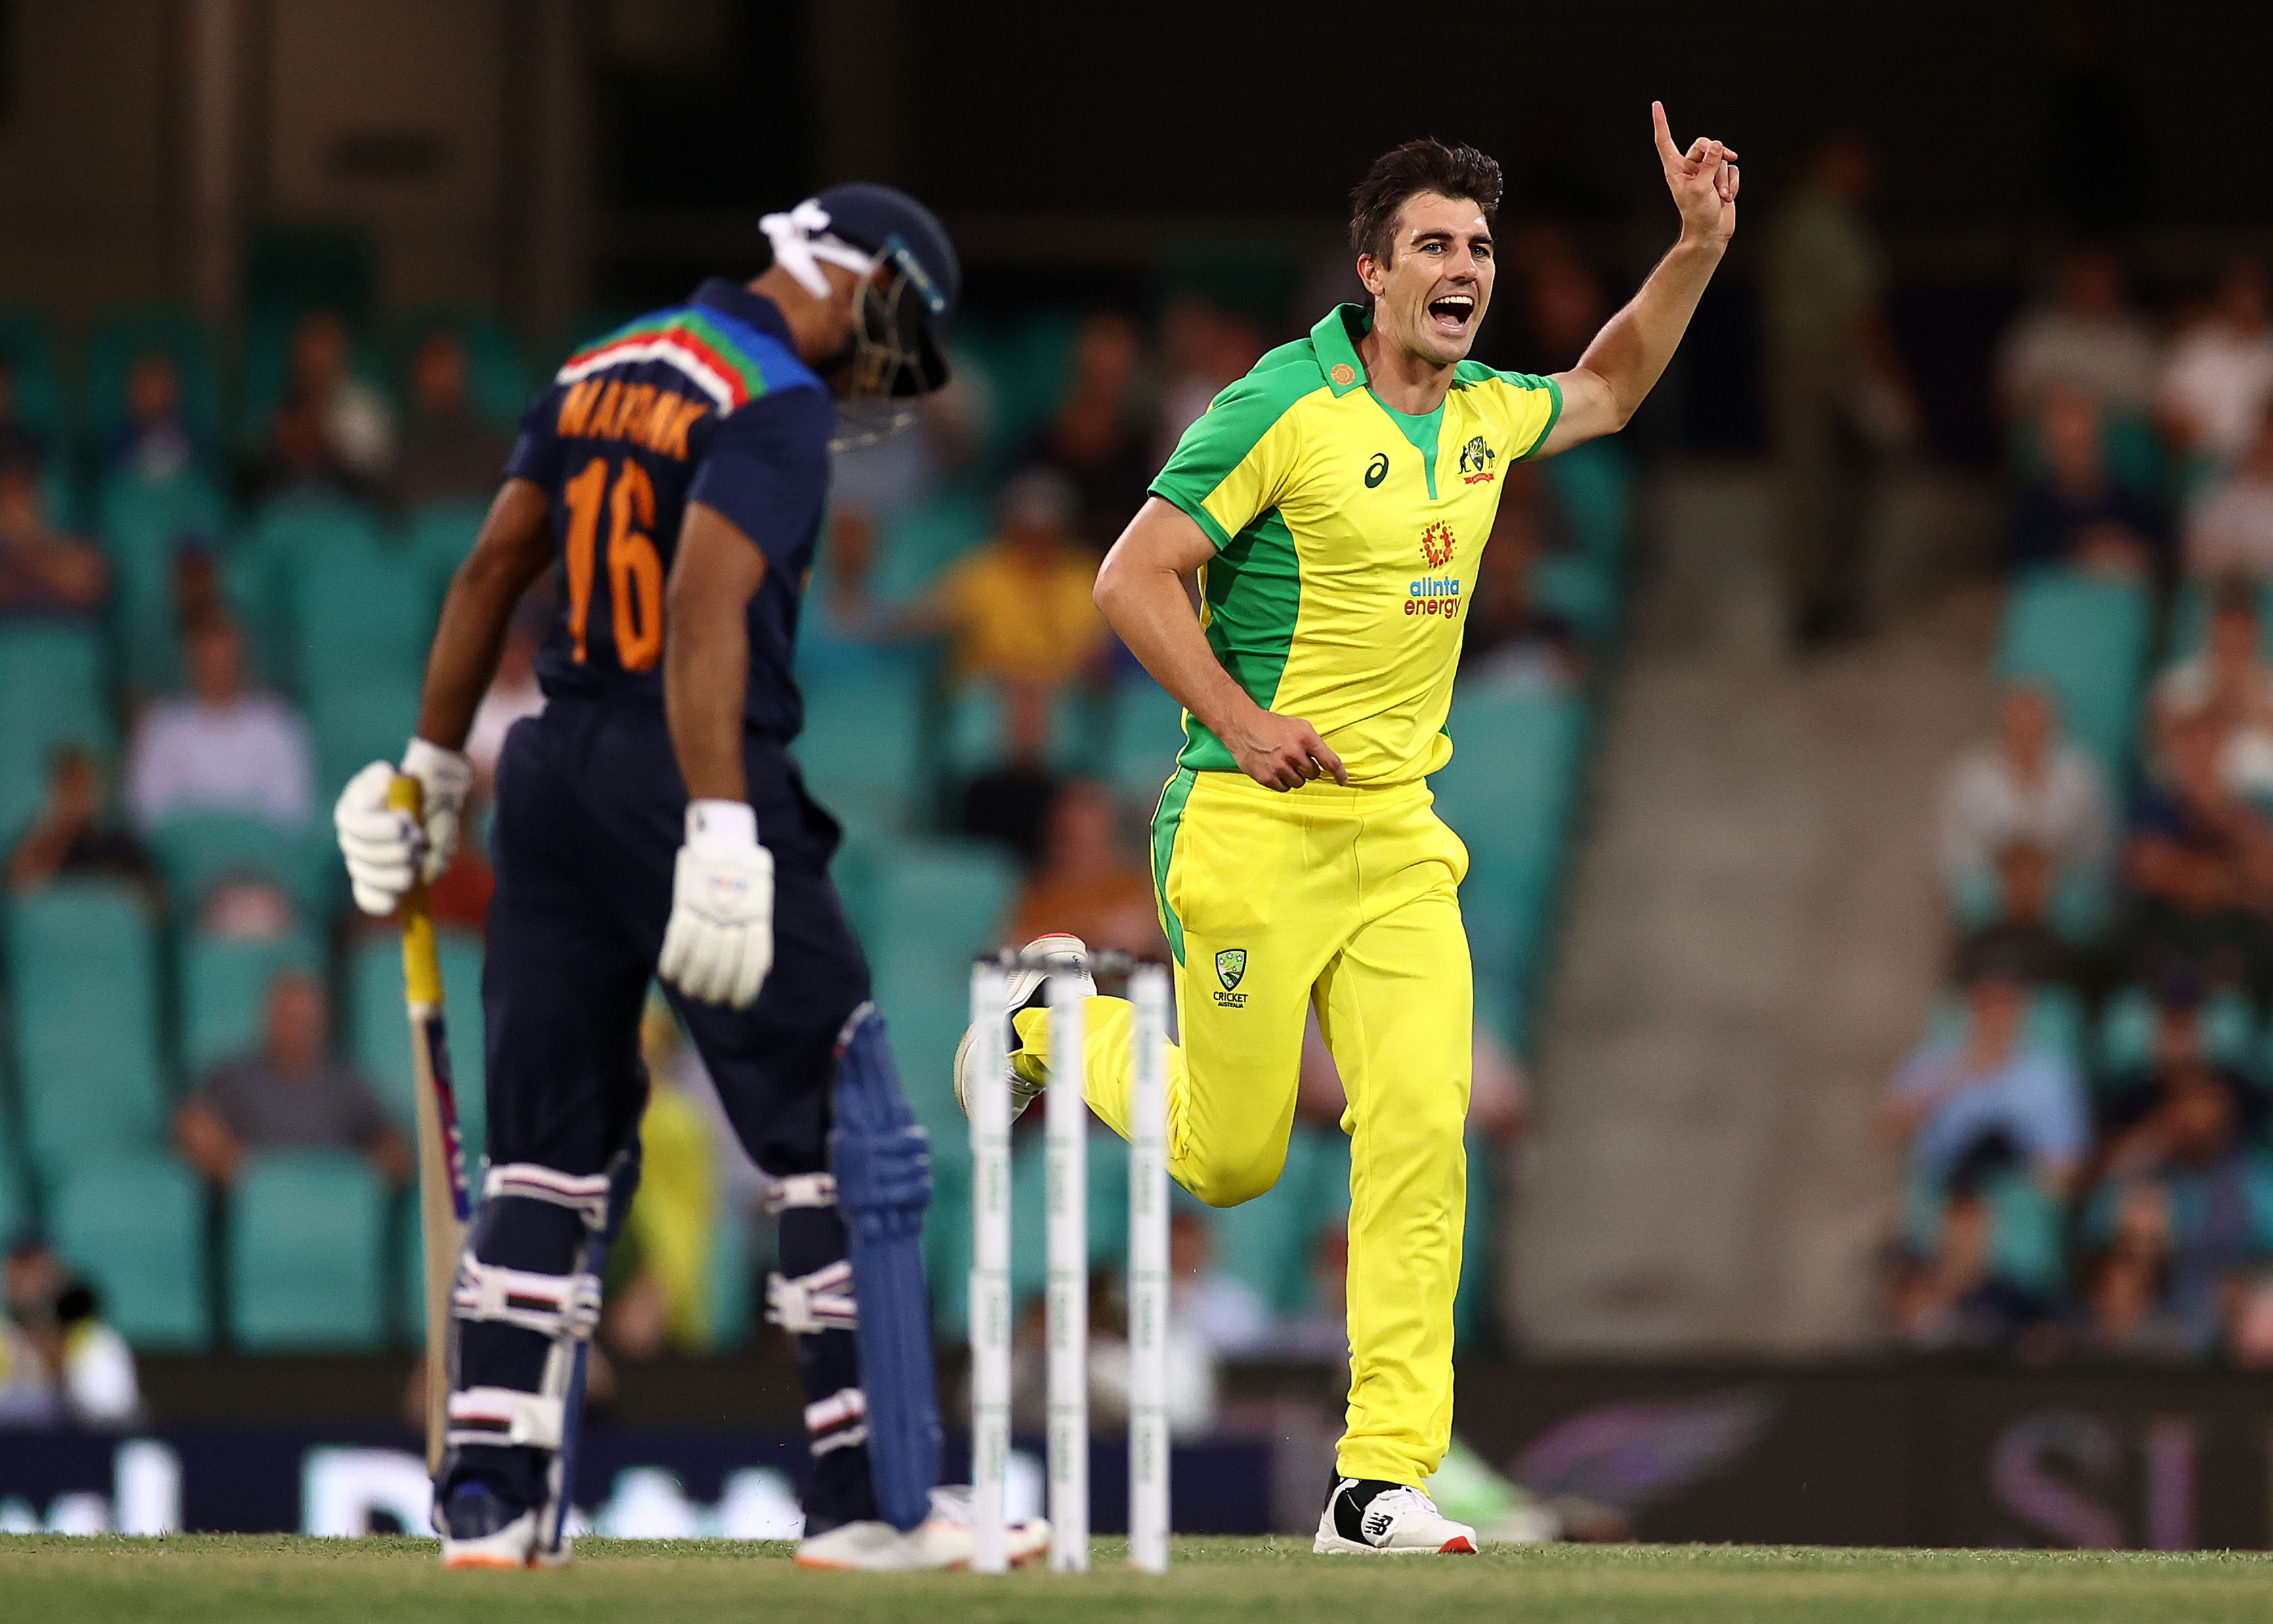 Pat Cummins of Australia celebrates after taking the wicket of Mayank Agarwal.